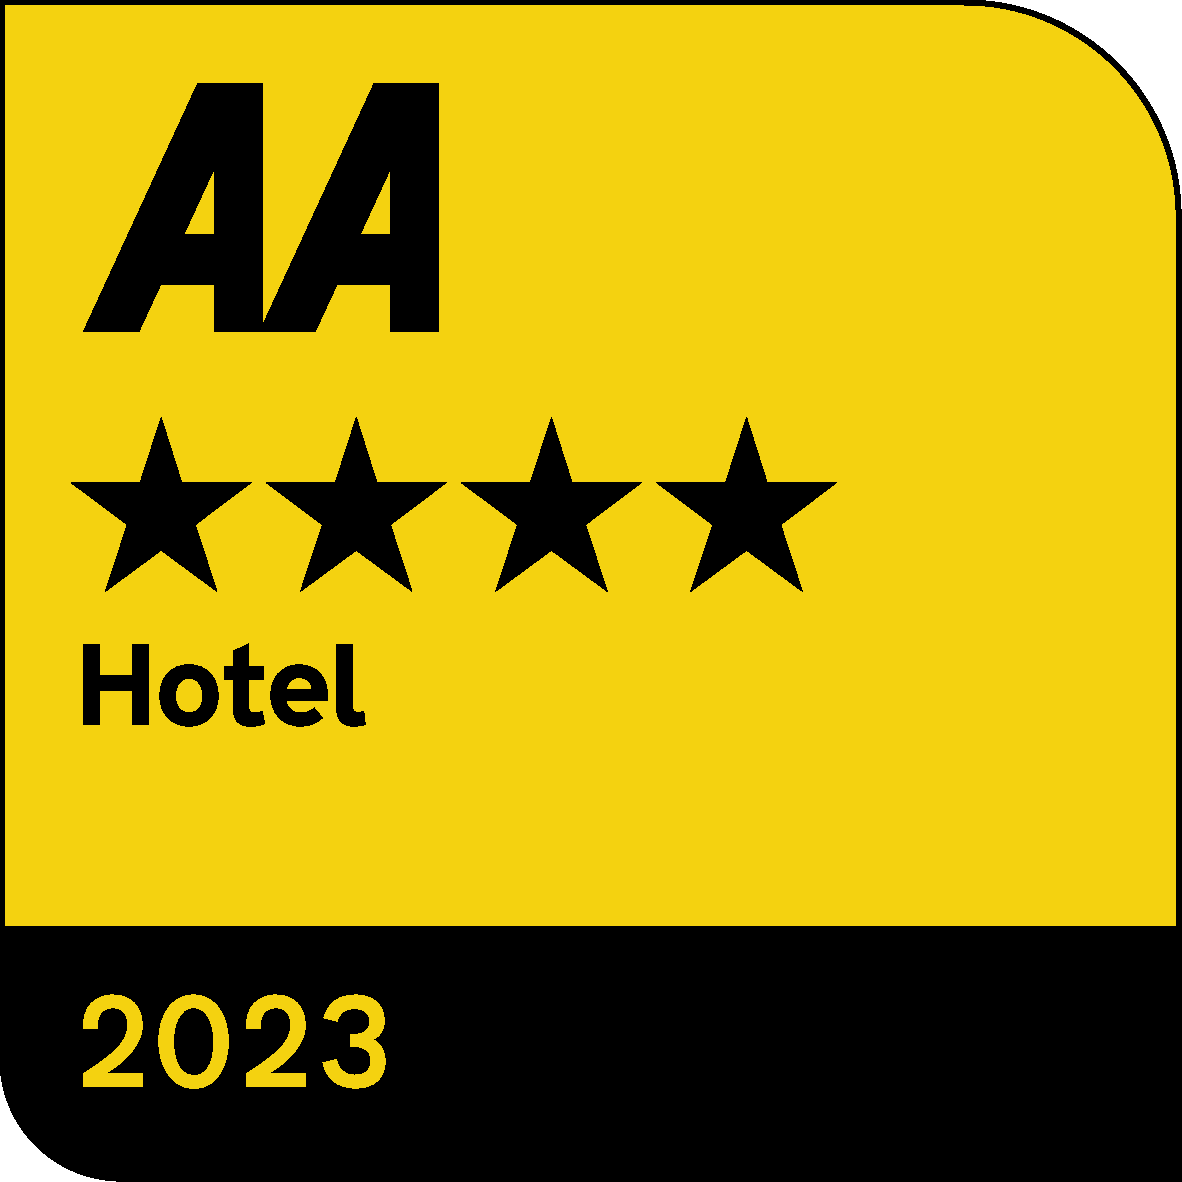 4 Star Hotel